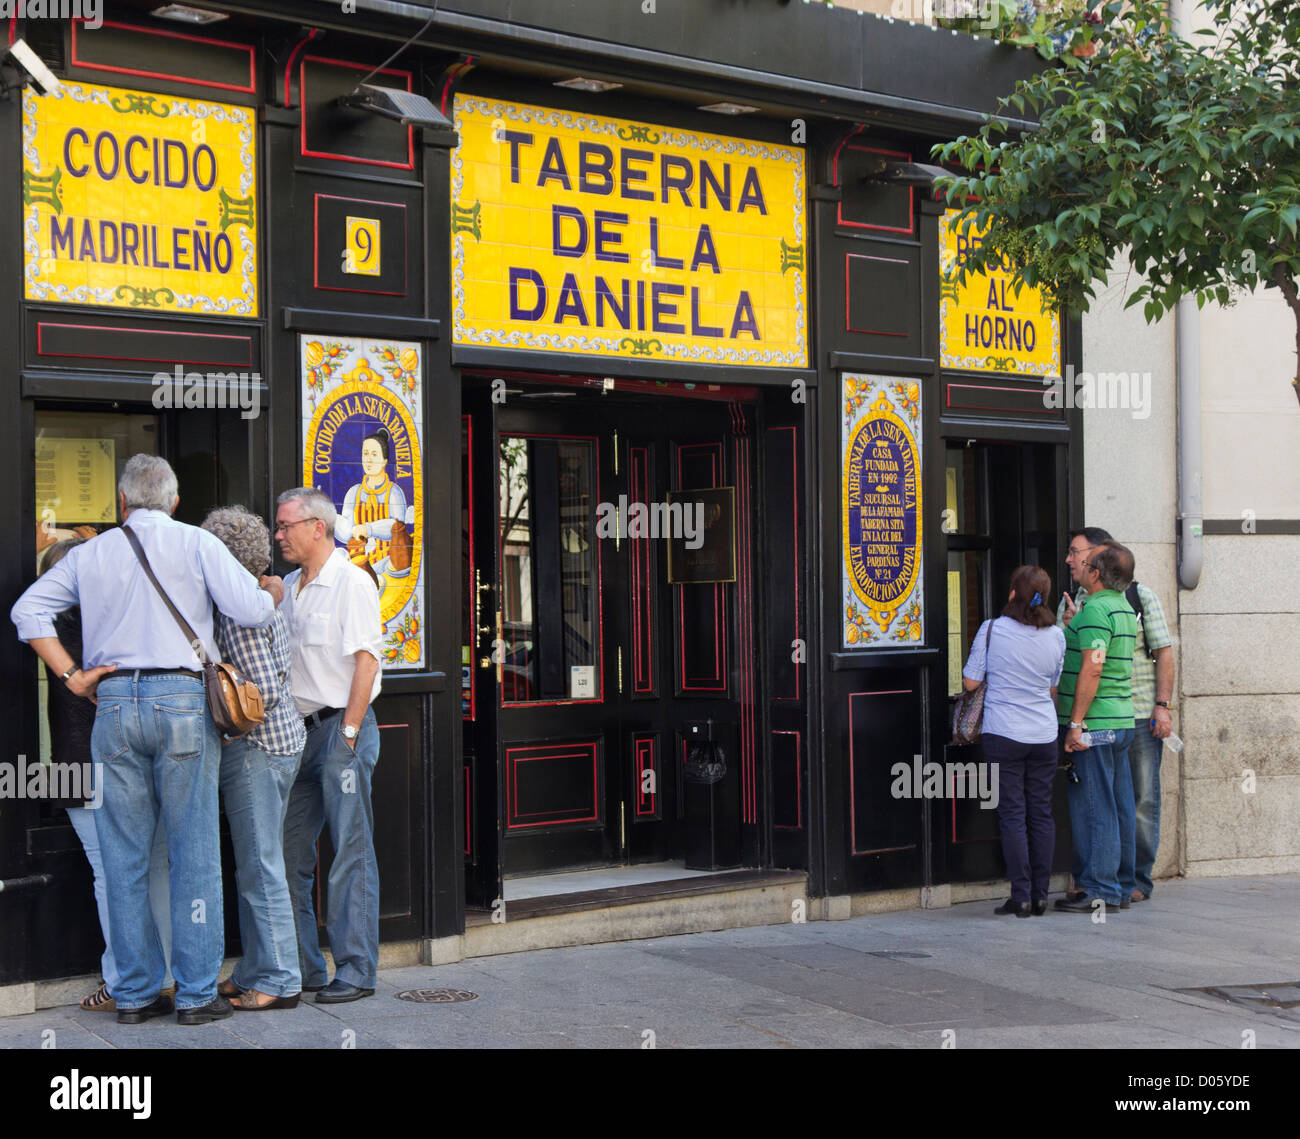 Calle de la Cuchilleros, Madrid, Spain. Taberna de la Daniela, restaurant famous for it's Spanish cocido dish. Stock Photo